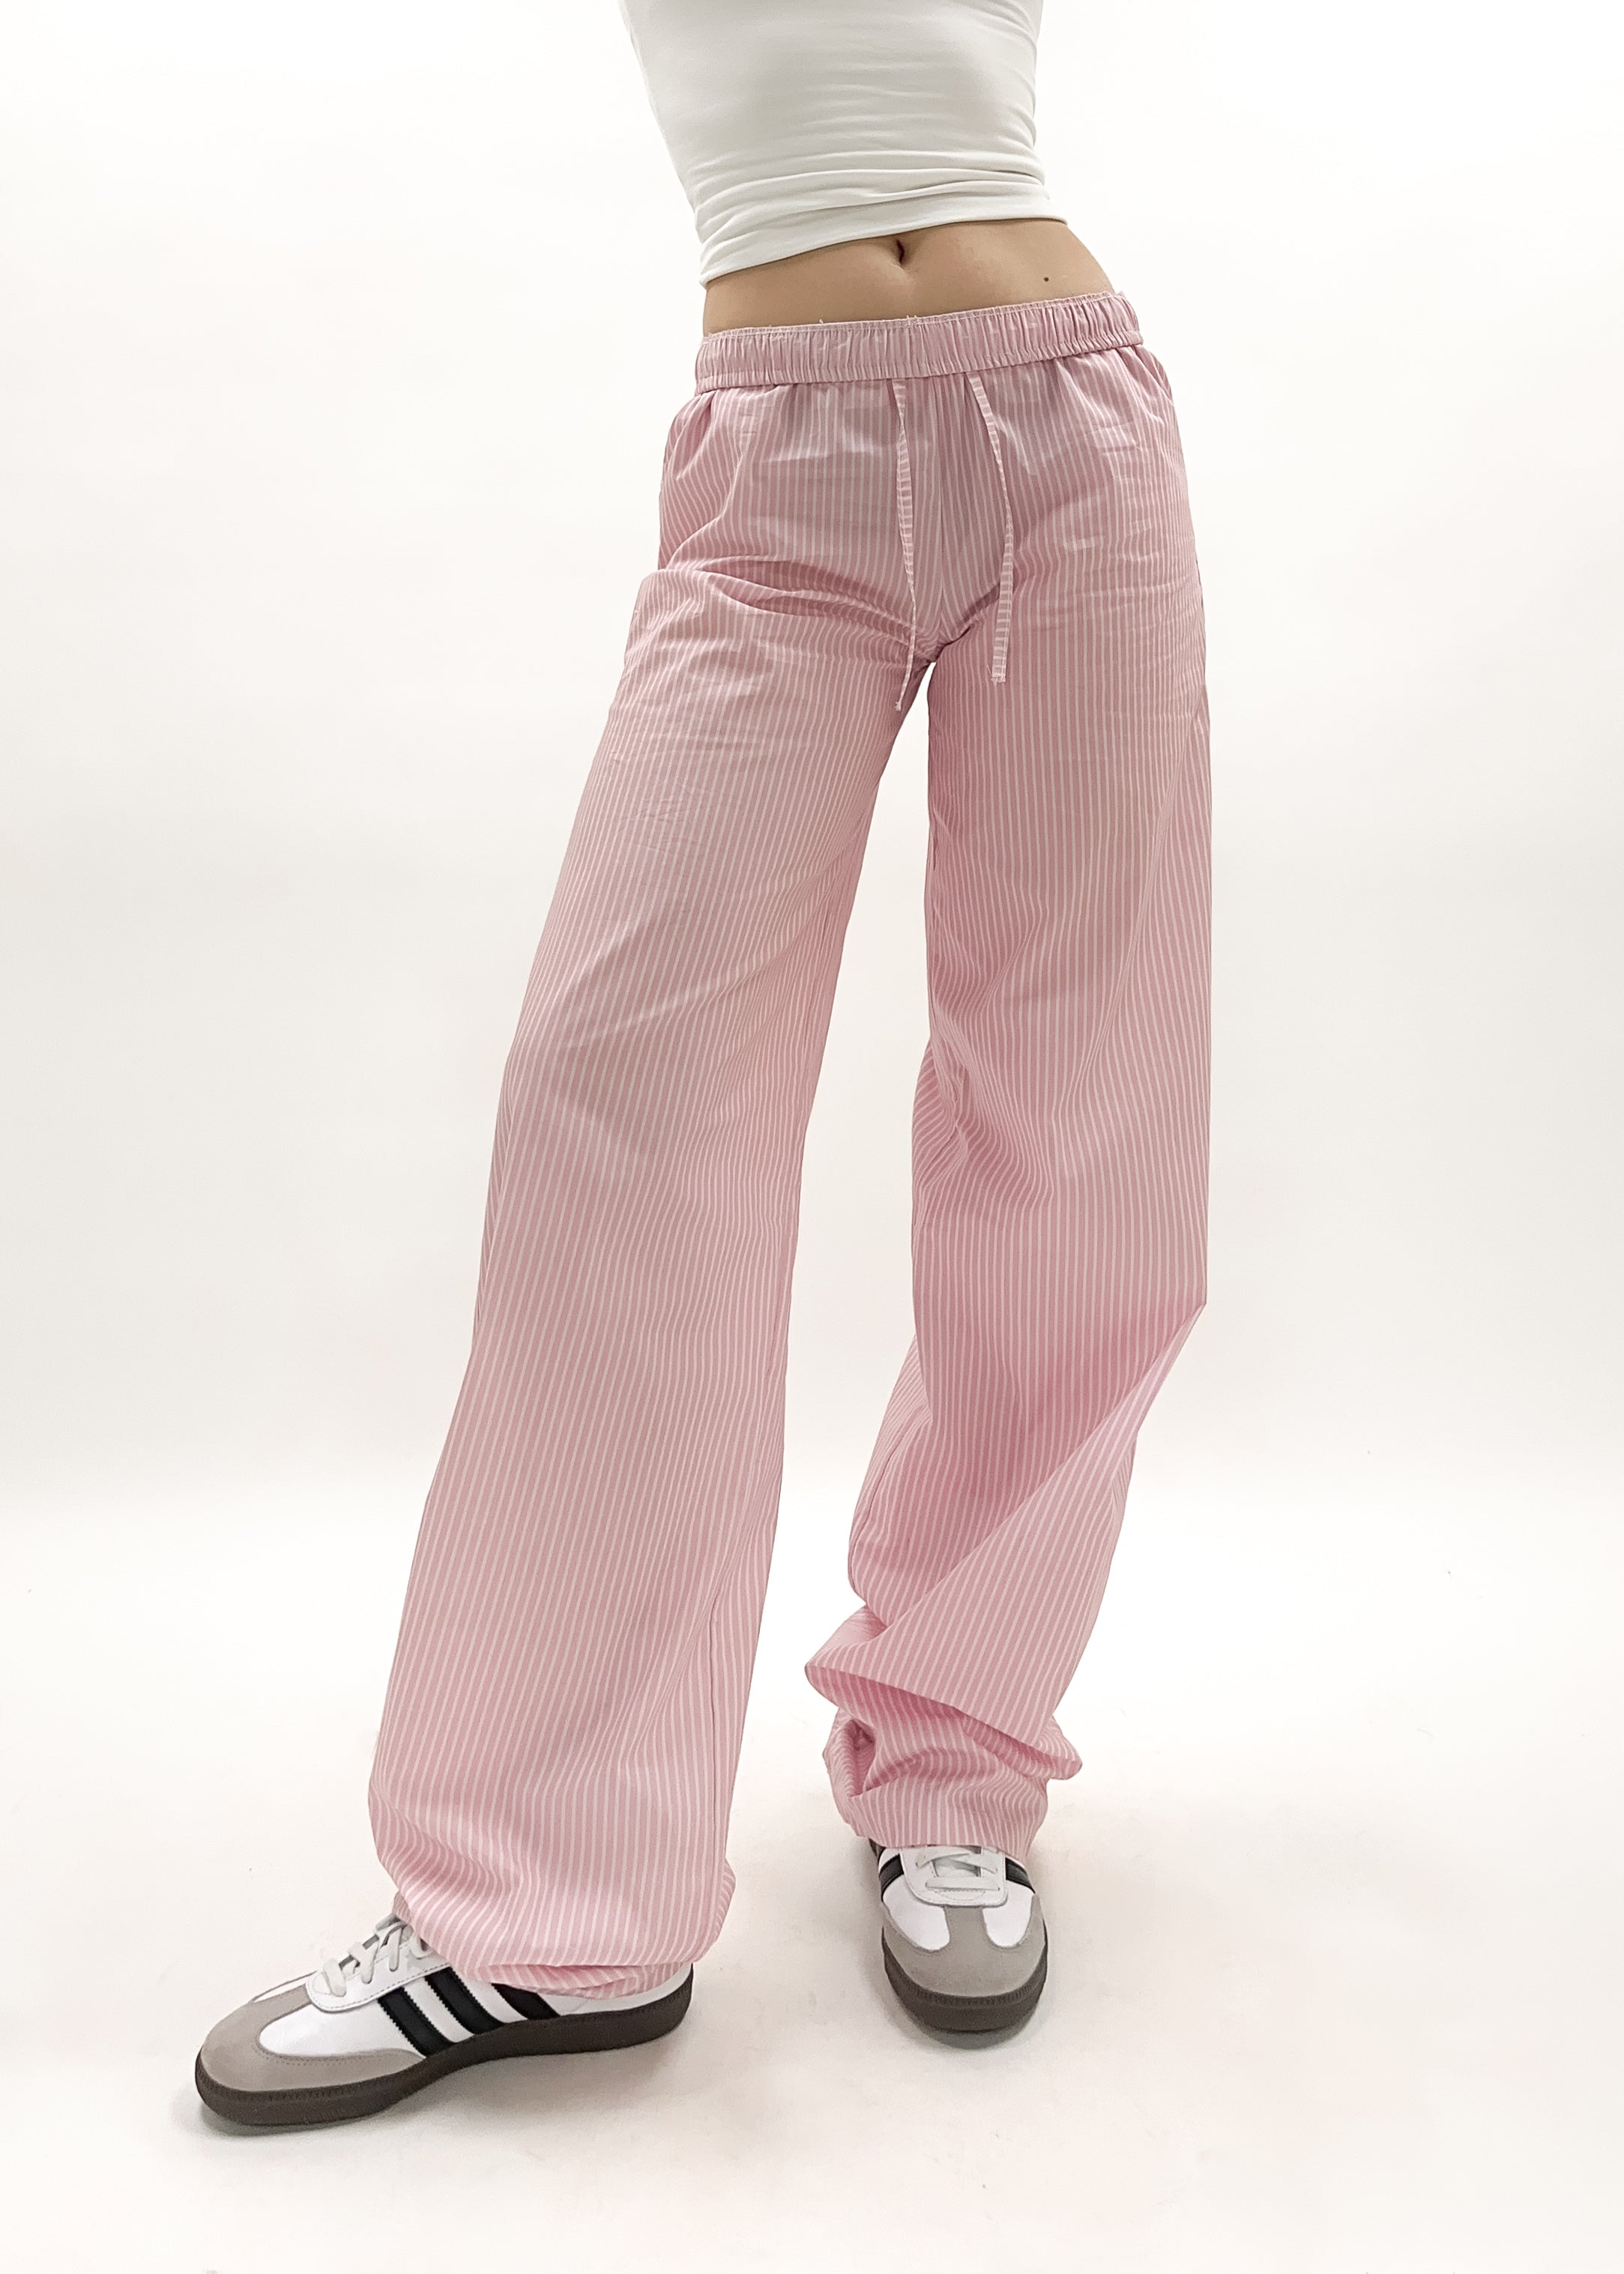 Cotton pants striped (TALL) pink/white